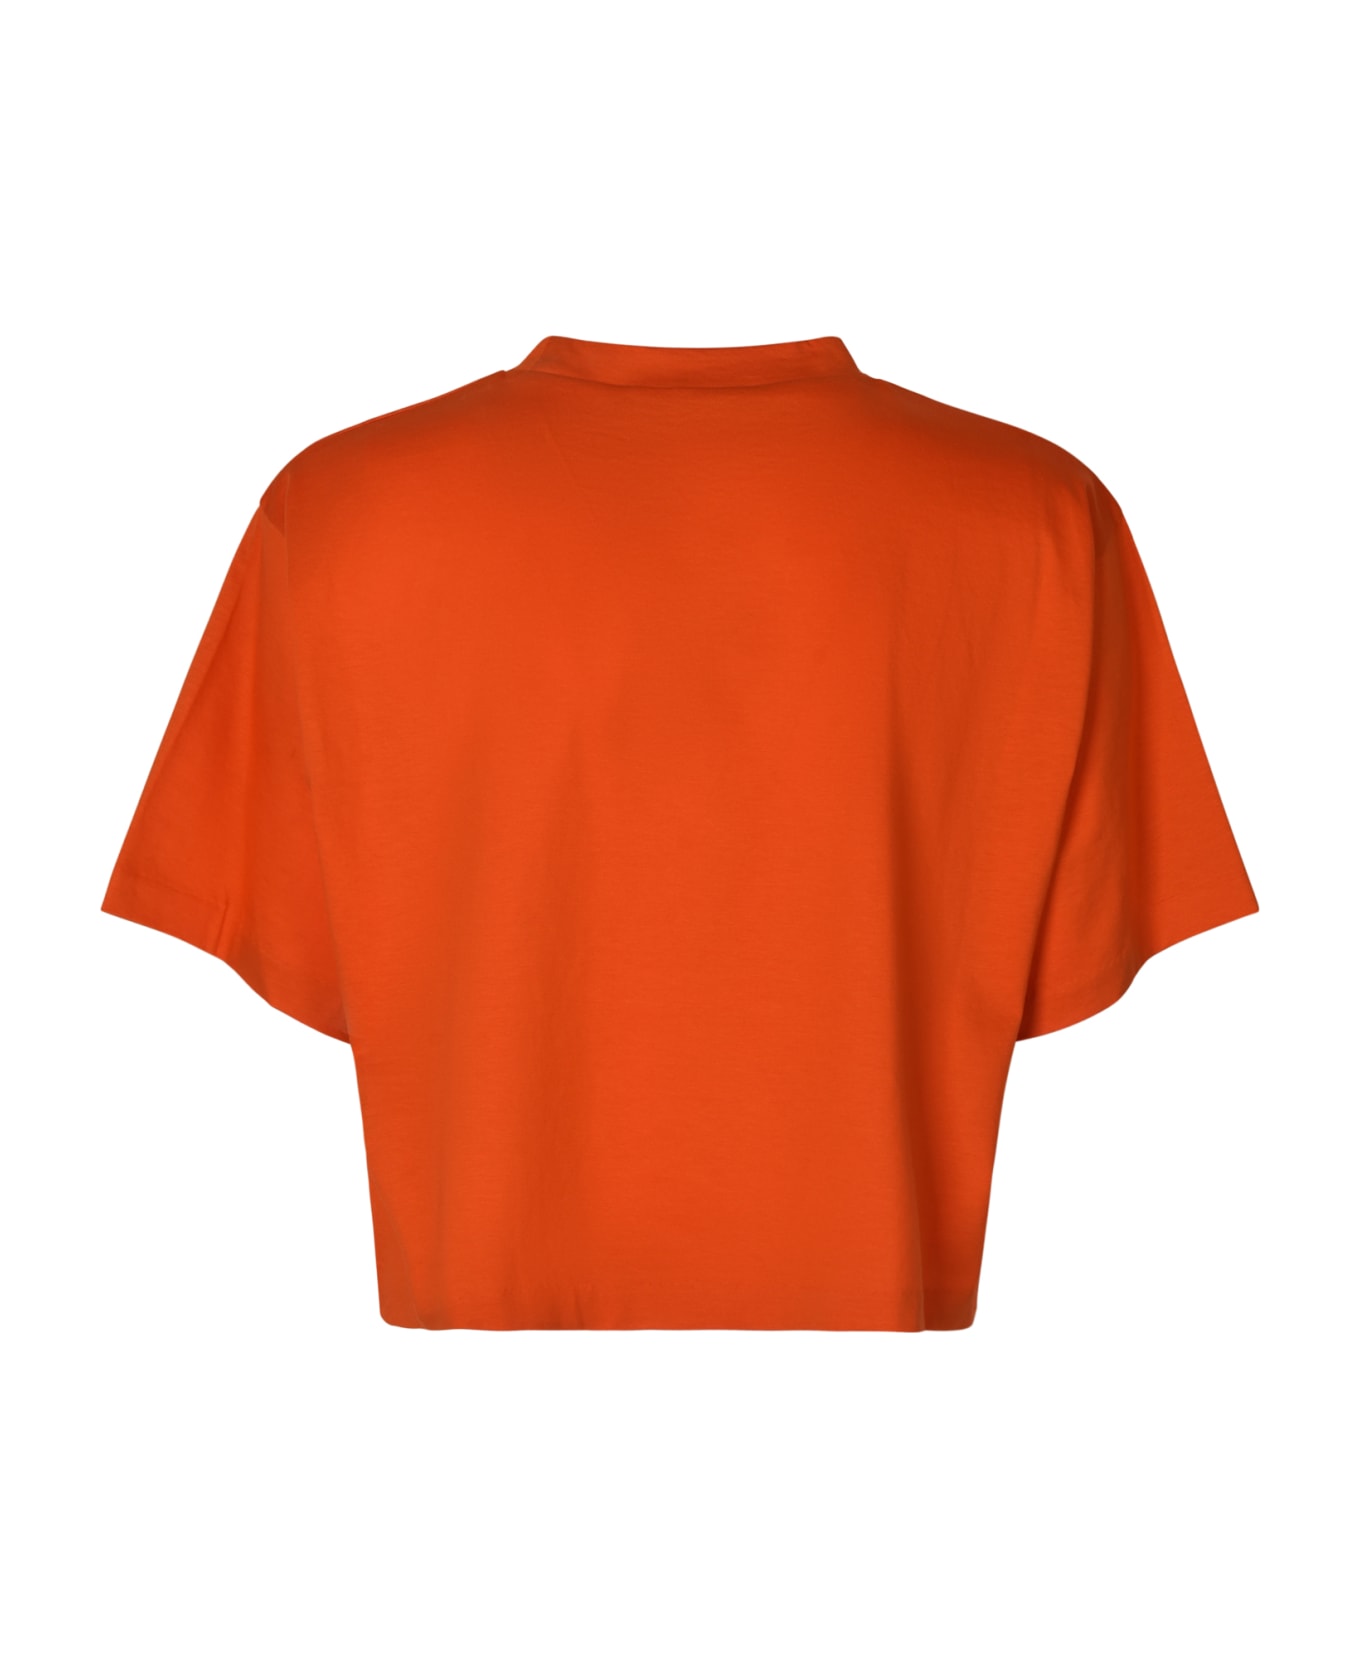 Sofie d'Hoore Tour Jel T-shirt - Tangerine Tシャツ